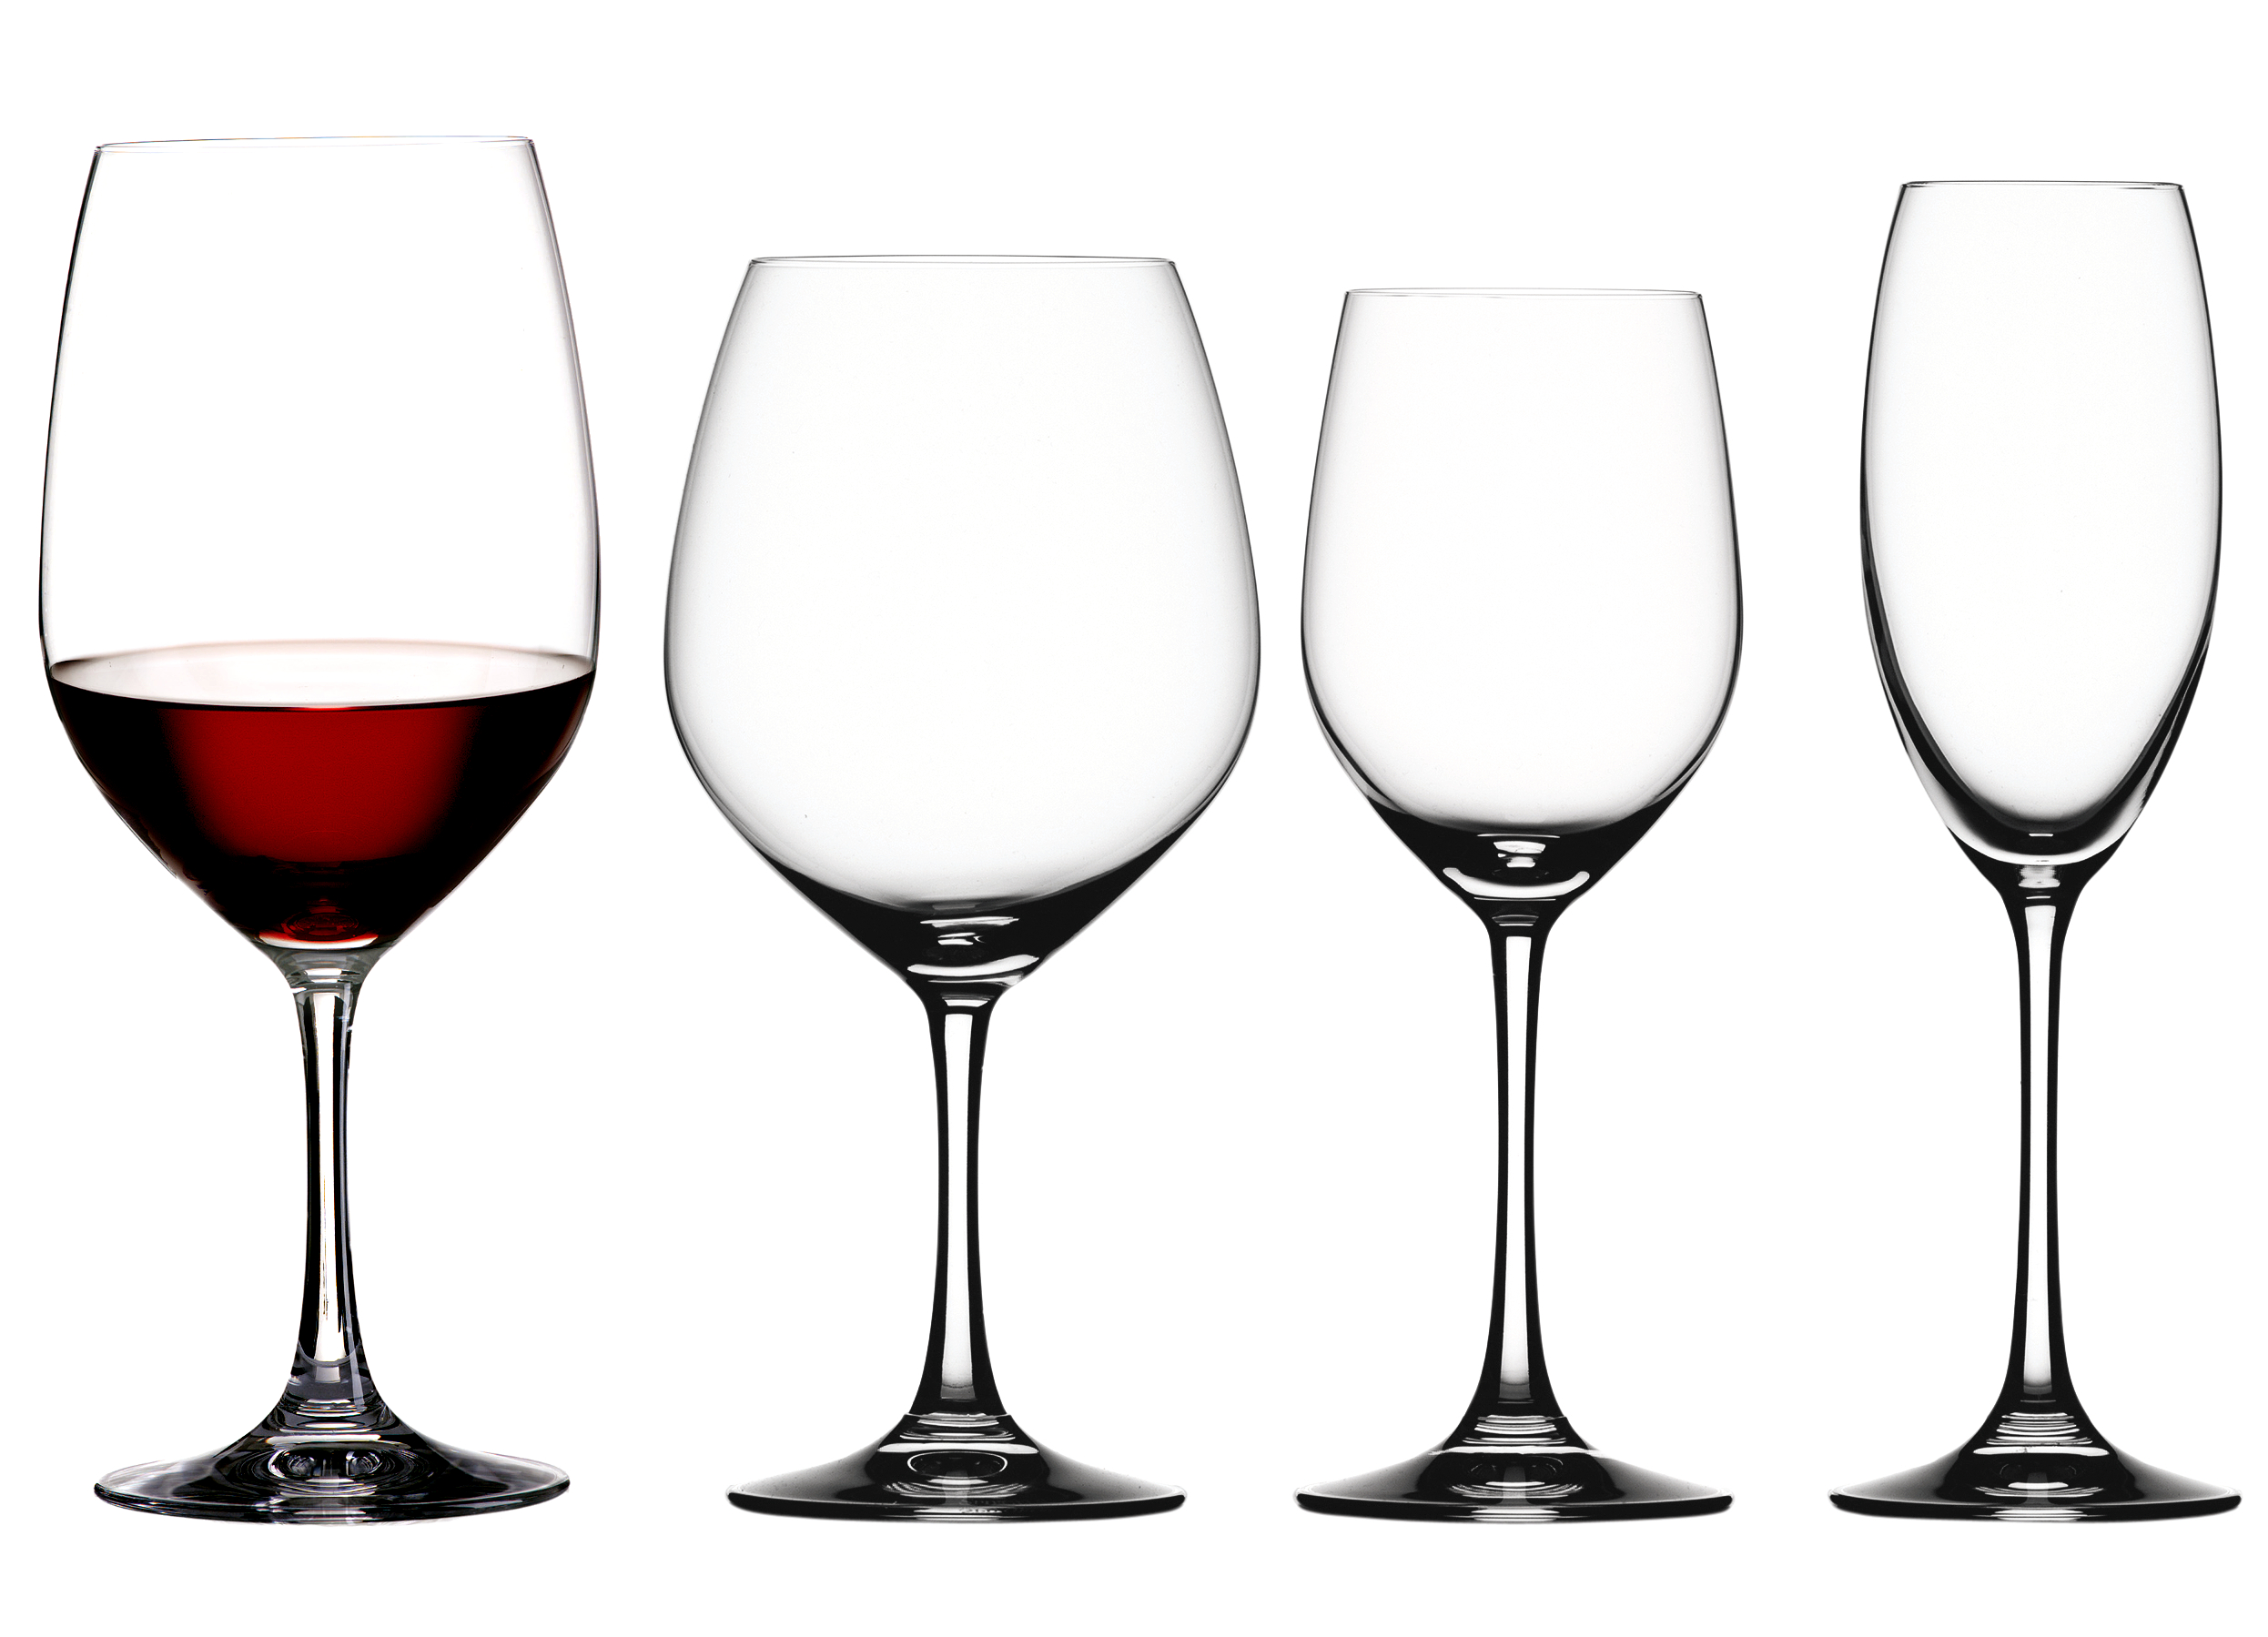 Формы бокалов для вина. Типы винных бокалов. Бокал для вина название. Типы бокалов для вина.